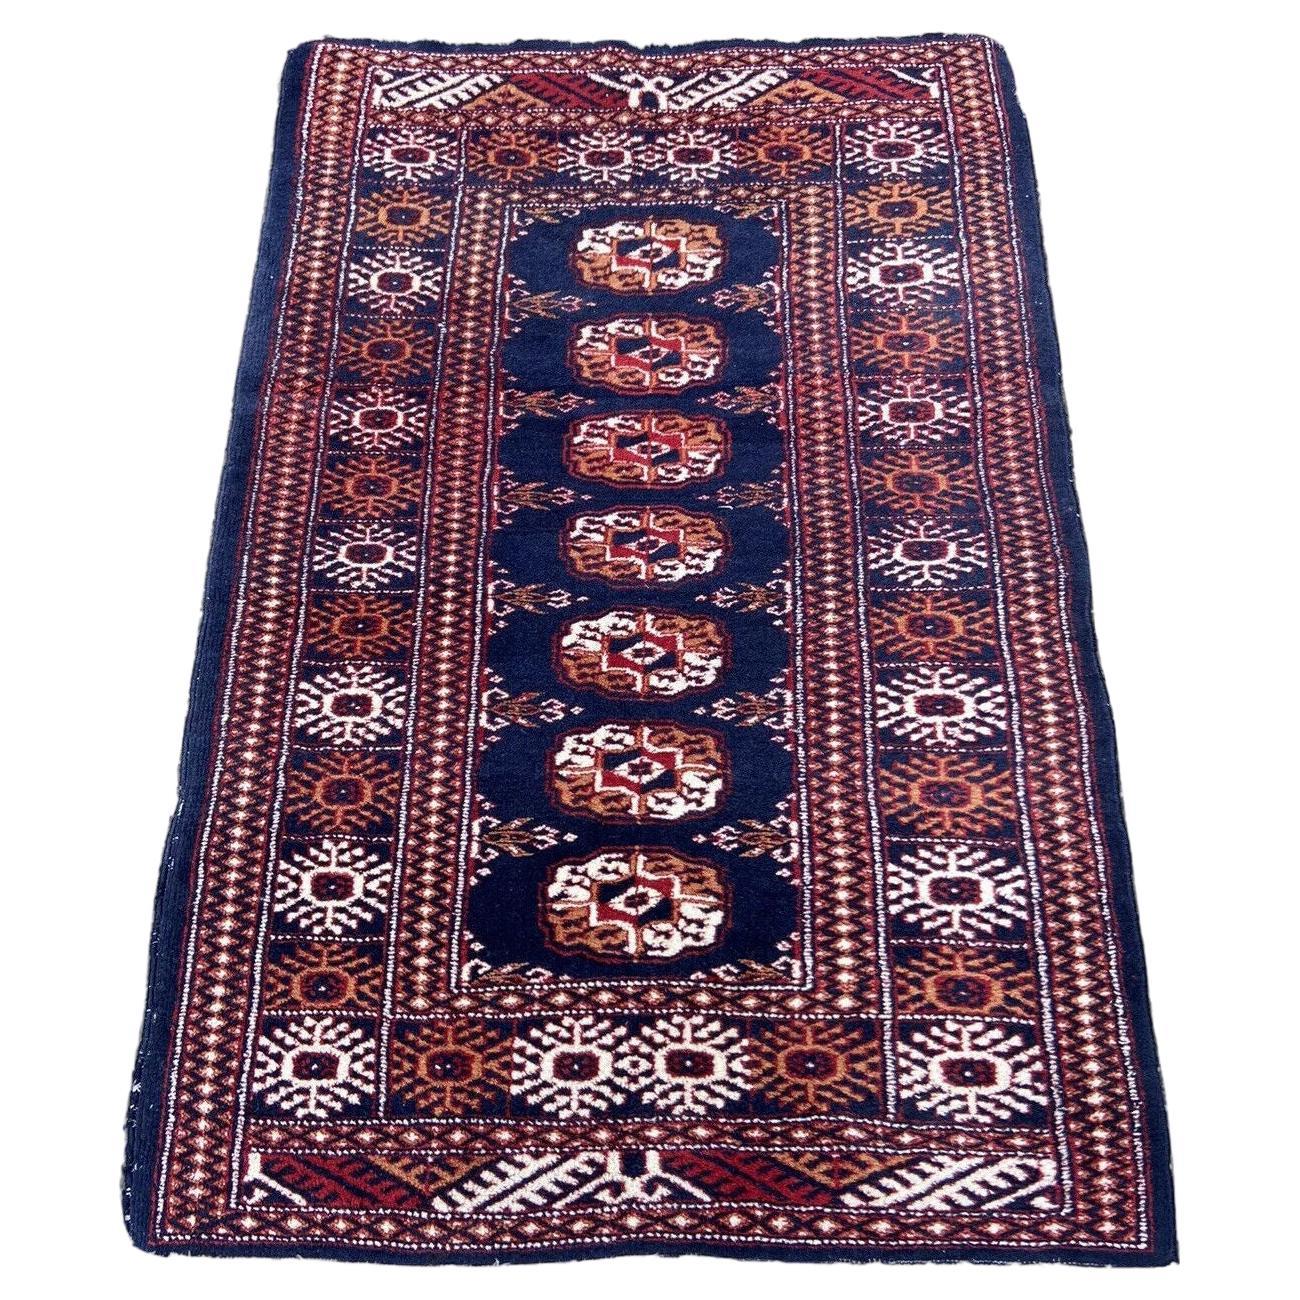 Handmade Vintage Uzbek Bukhara Rug 2.6' x 3.9', 1960s - 1S10